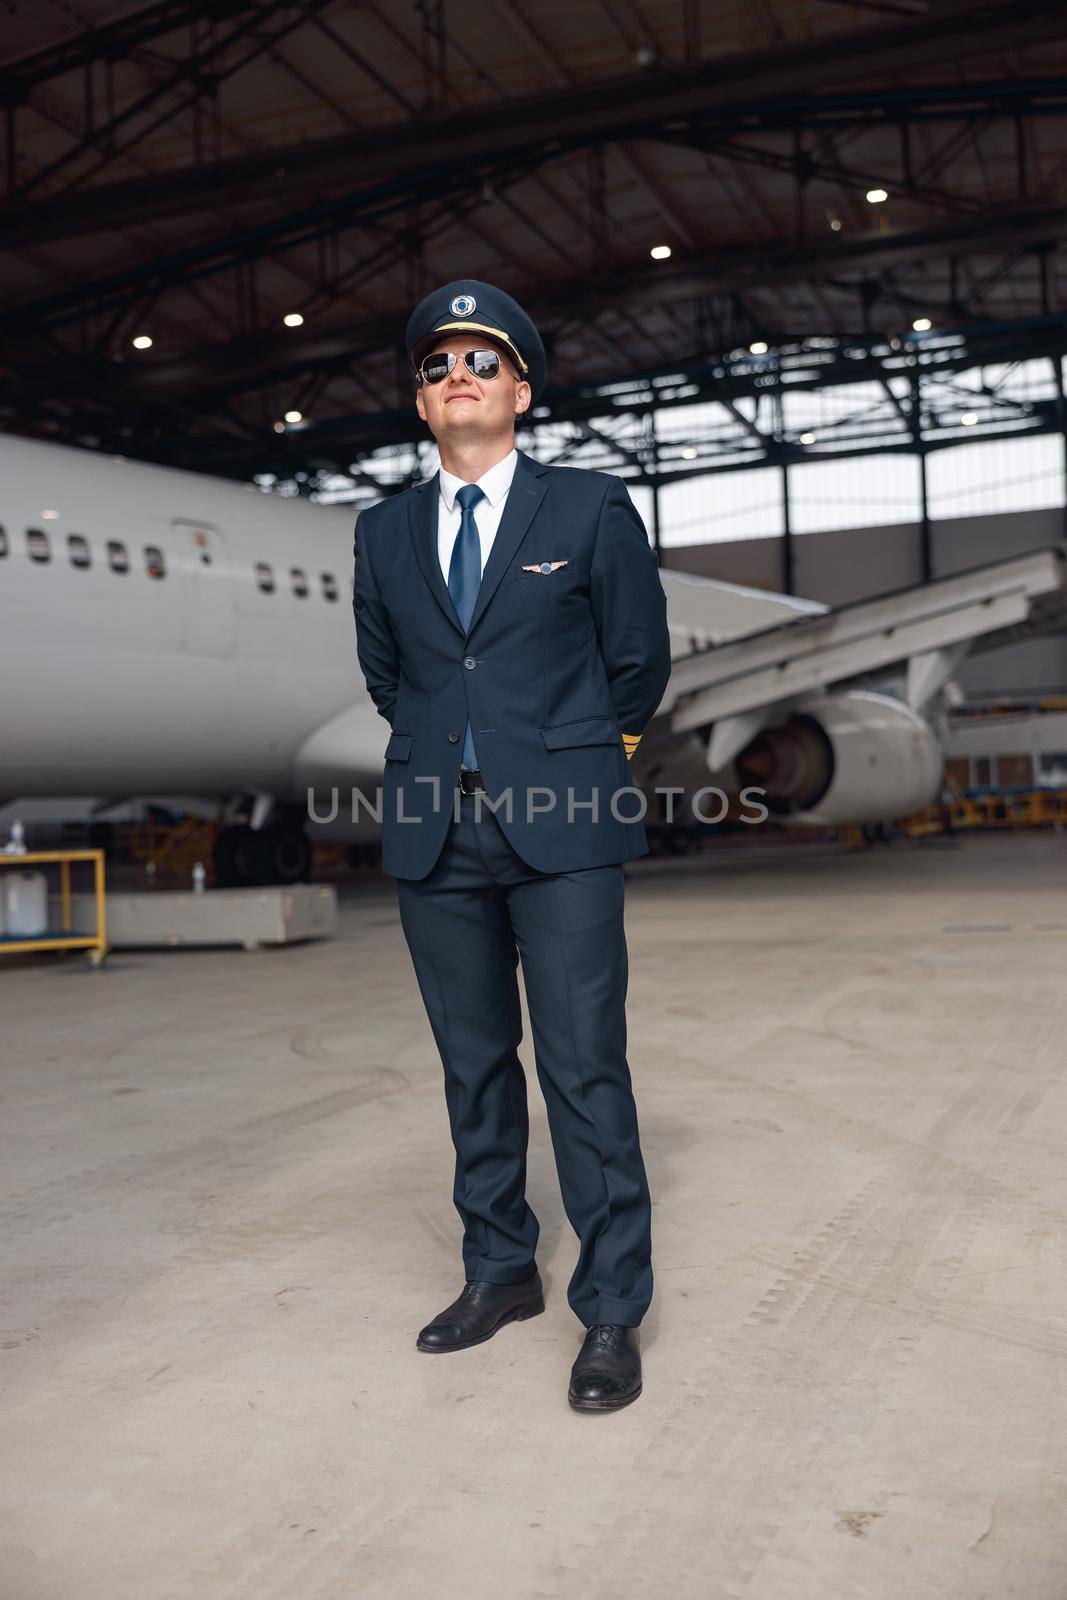 Full length shot of proud pilot in uniform and aviator sunglasses smiling away, standing in front of big passenger airplane in airport hangar by Yaroslav_astakhov